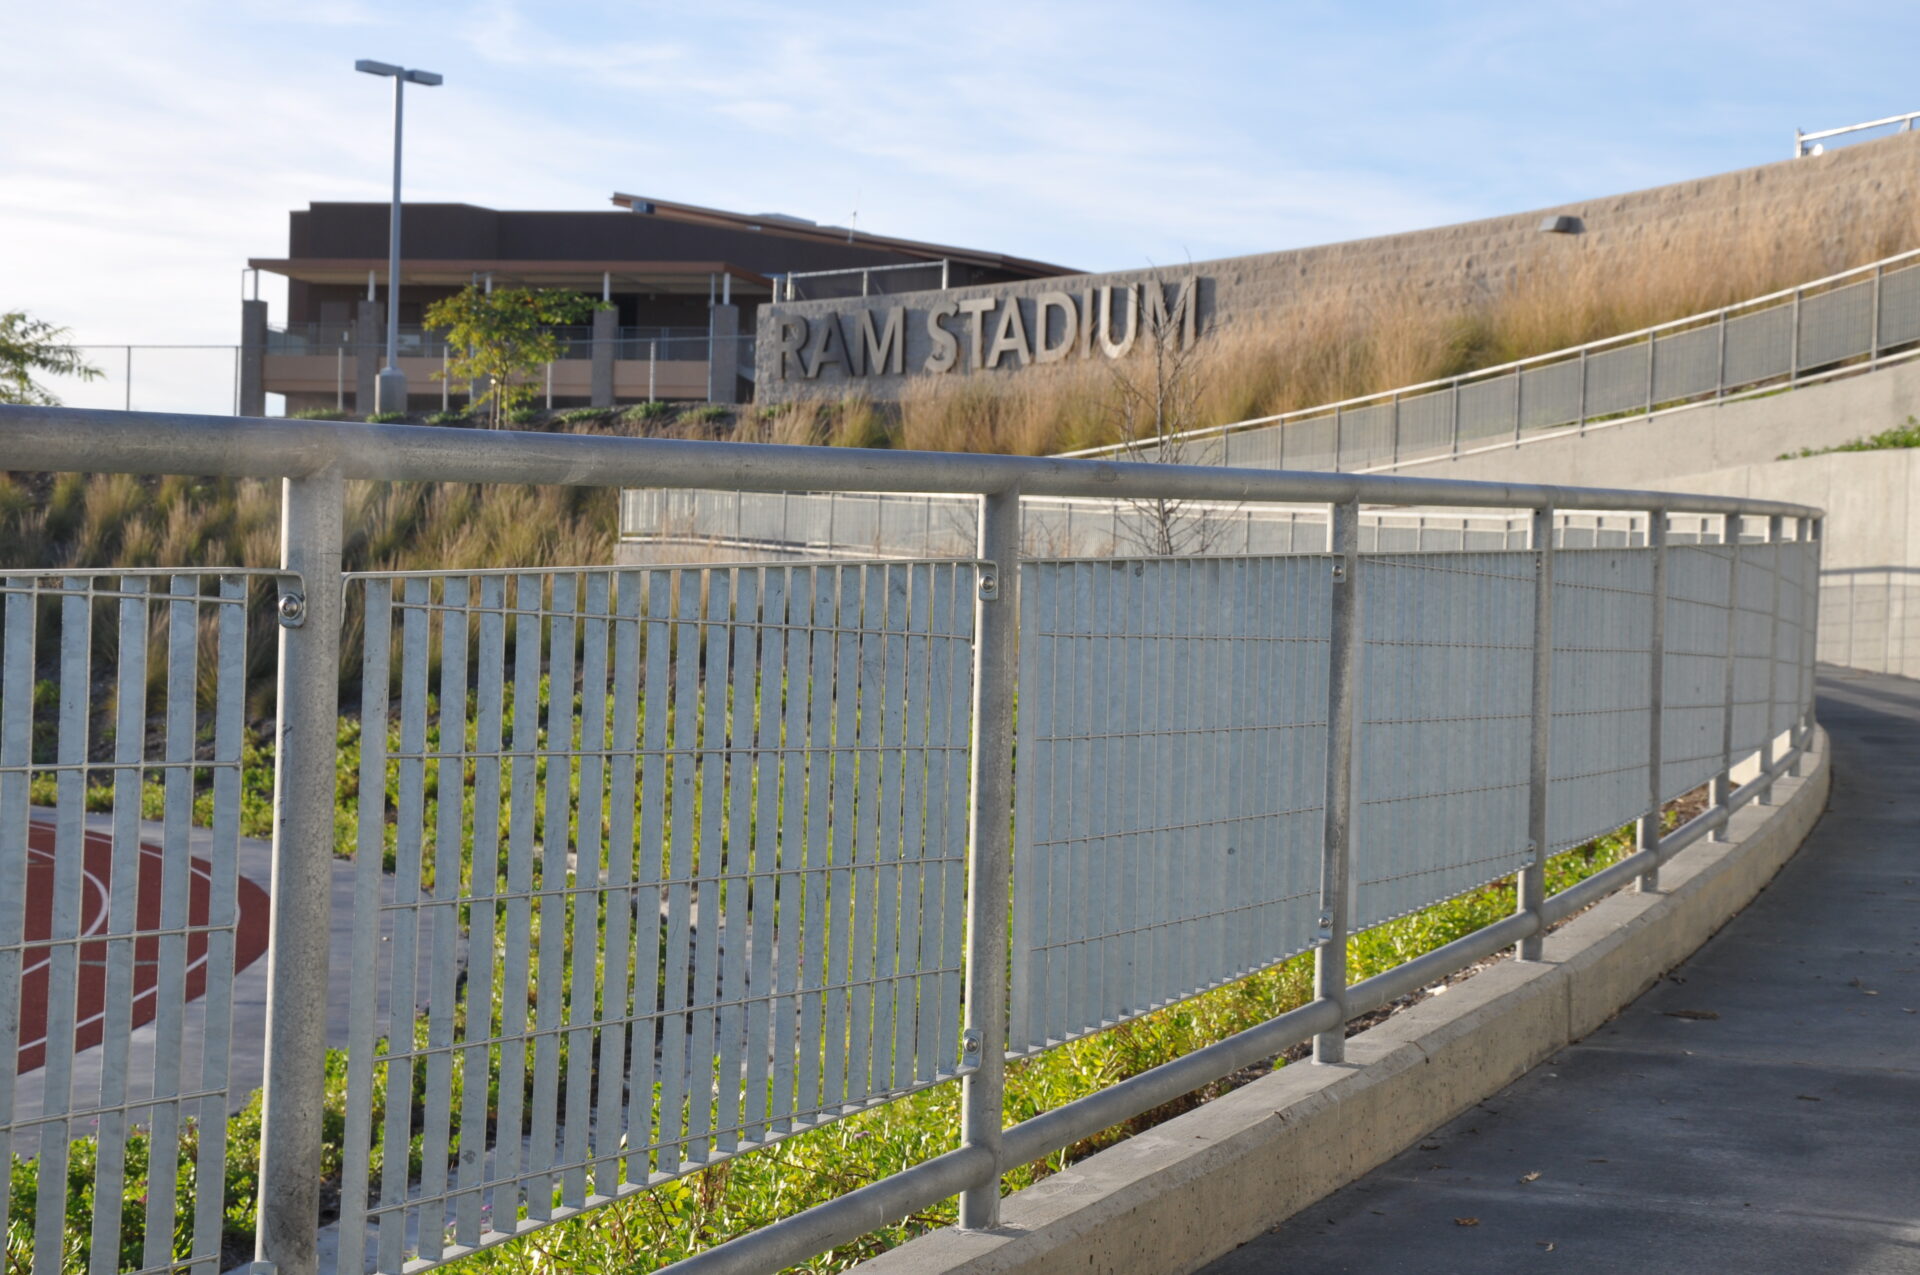 Opus10 infill used on graded outdoor stadium entrance